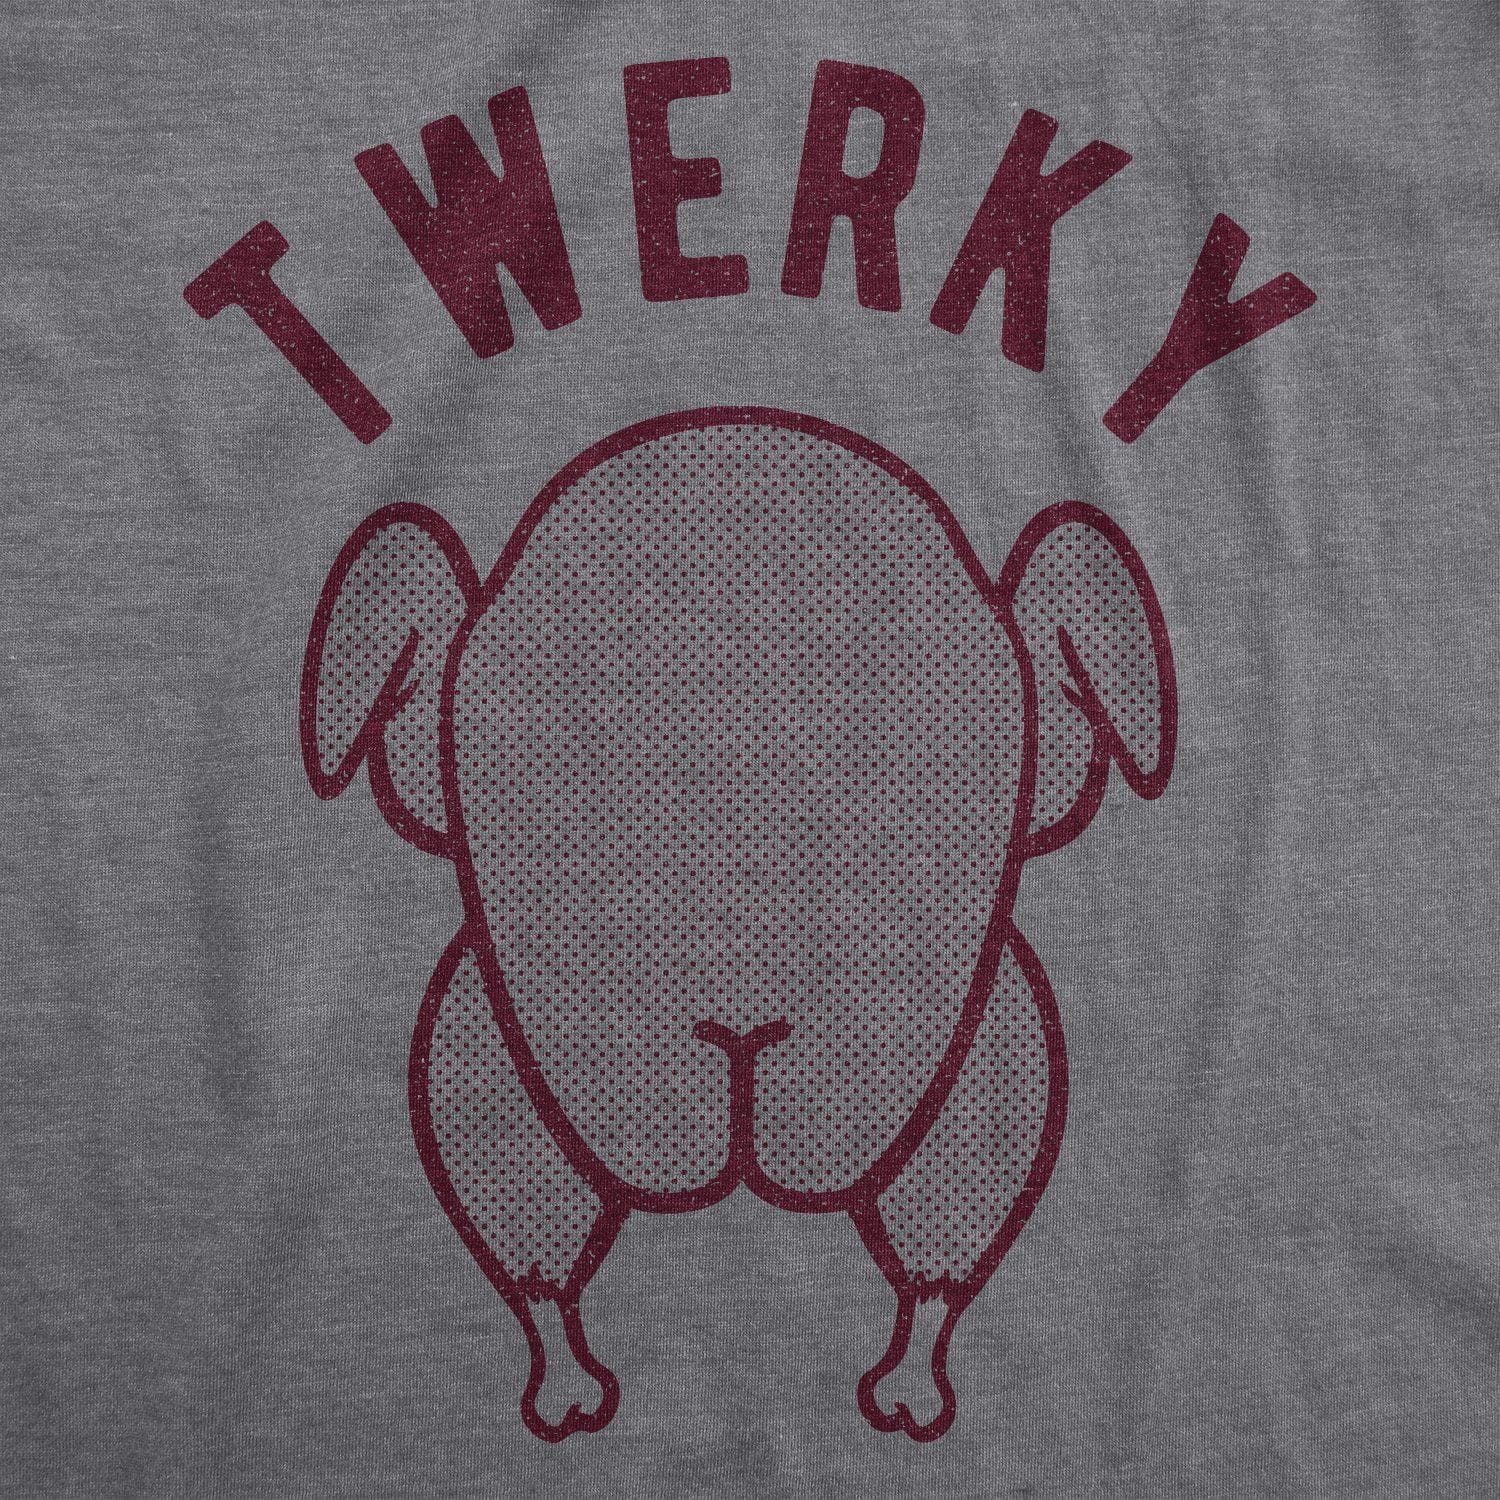 Twerky Women's Tshirt - Crazy Dog T-Shirts